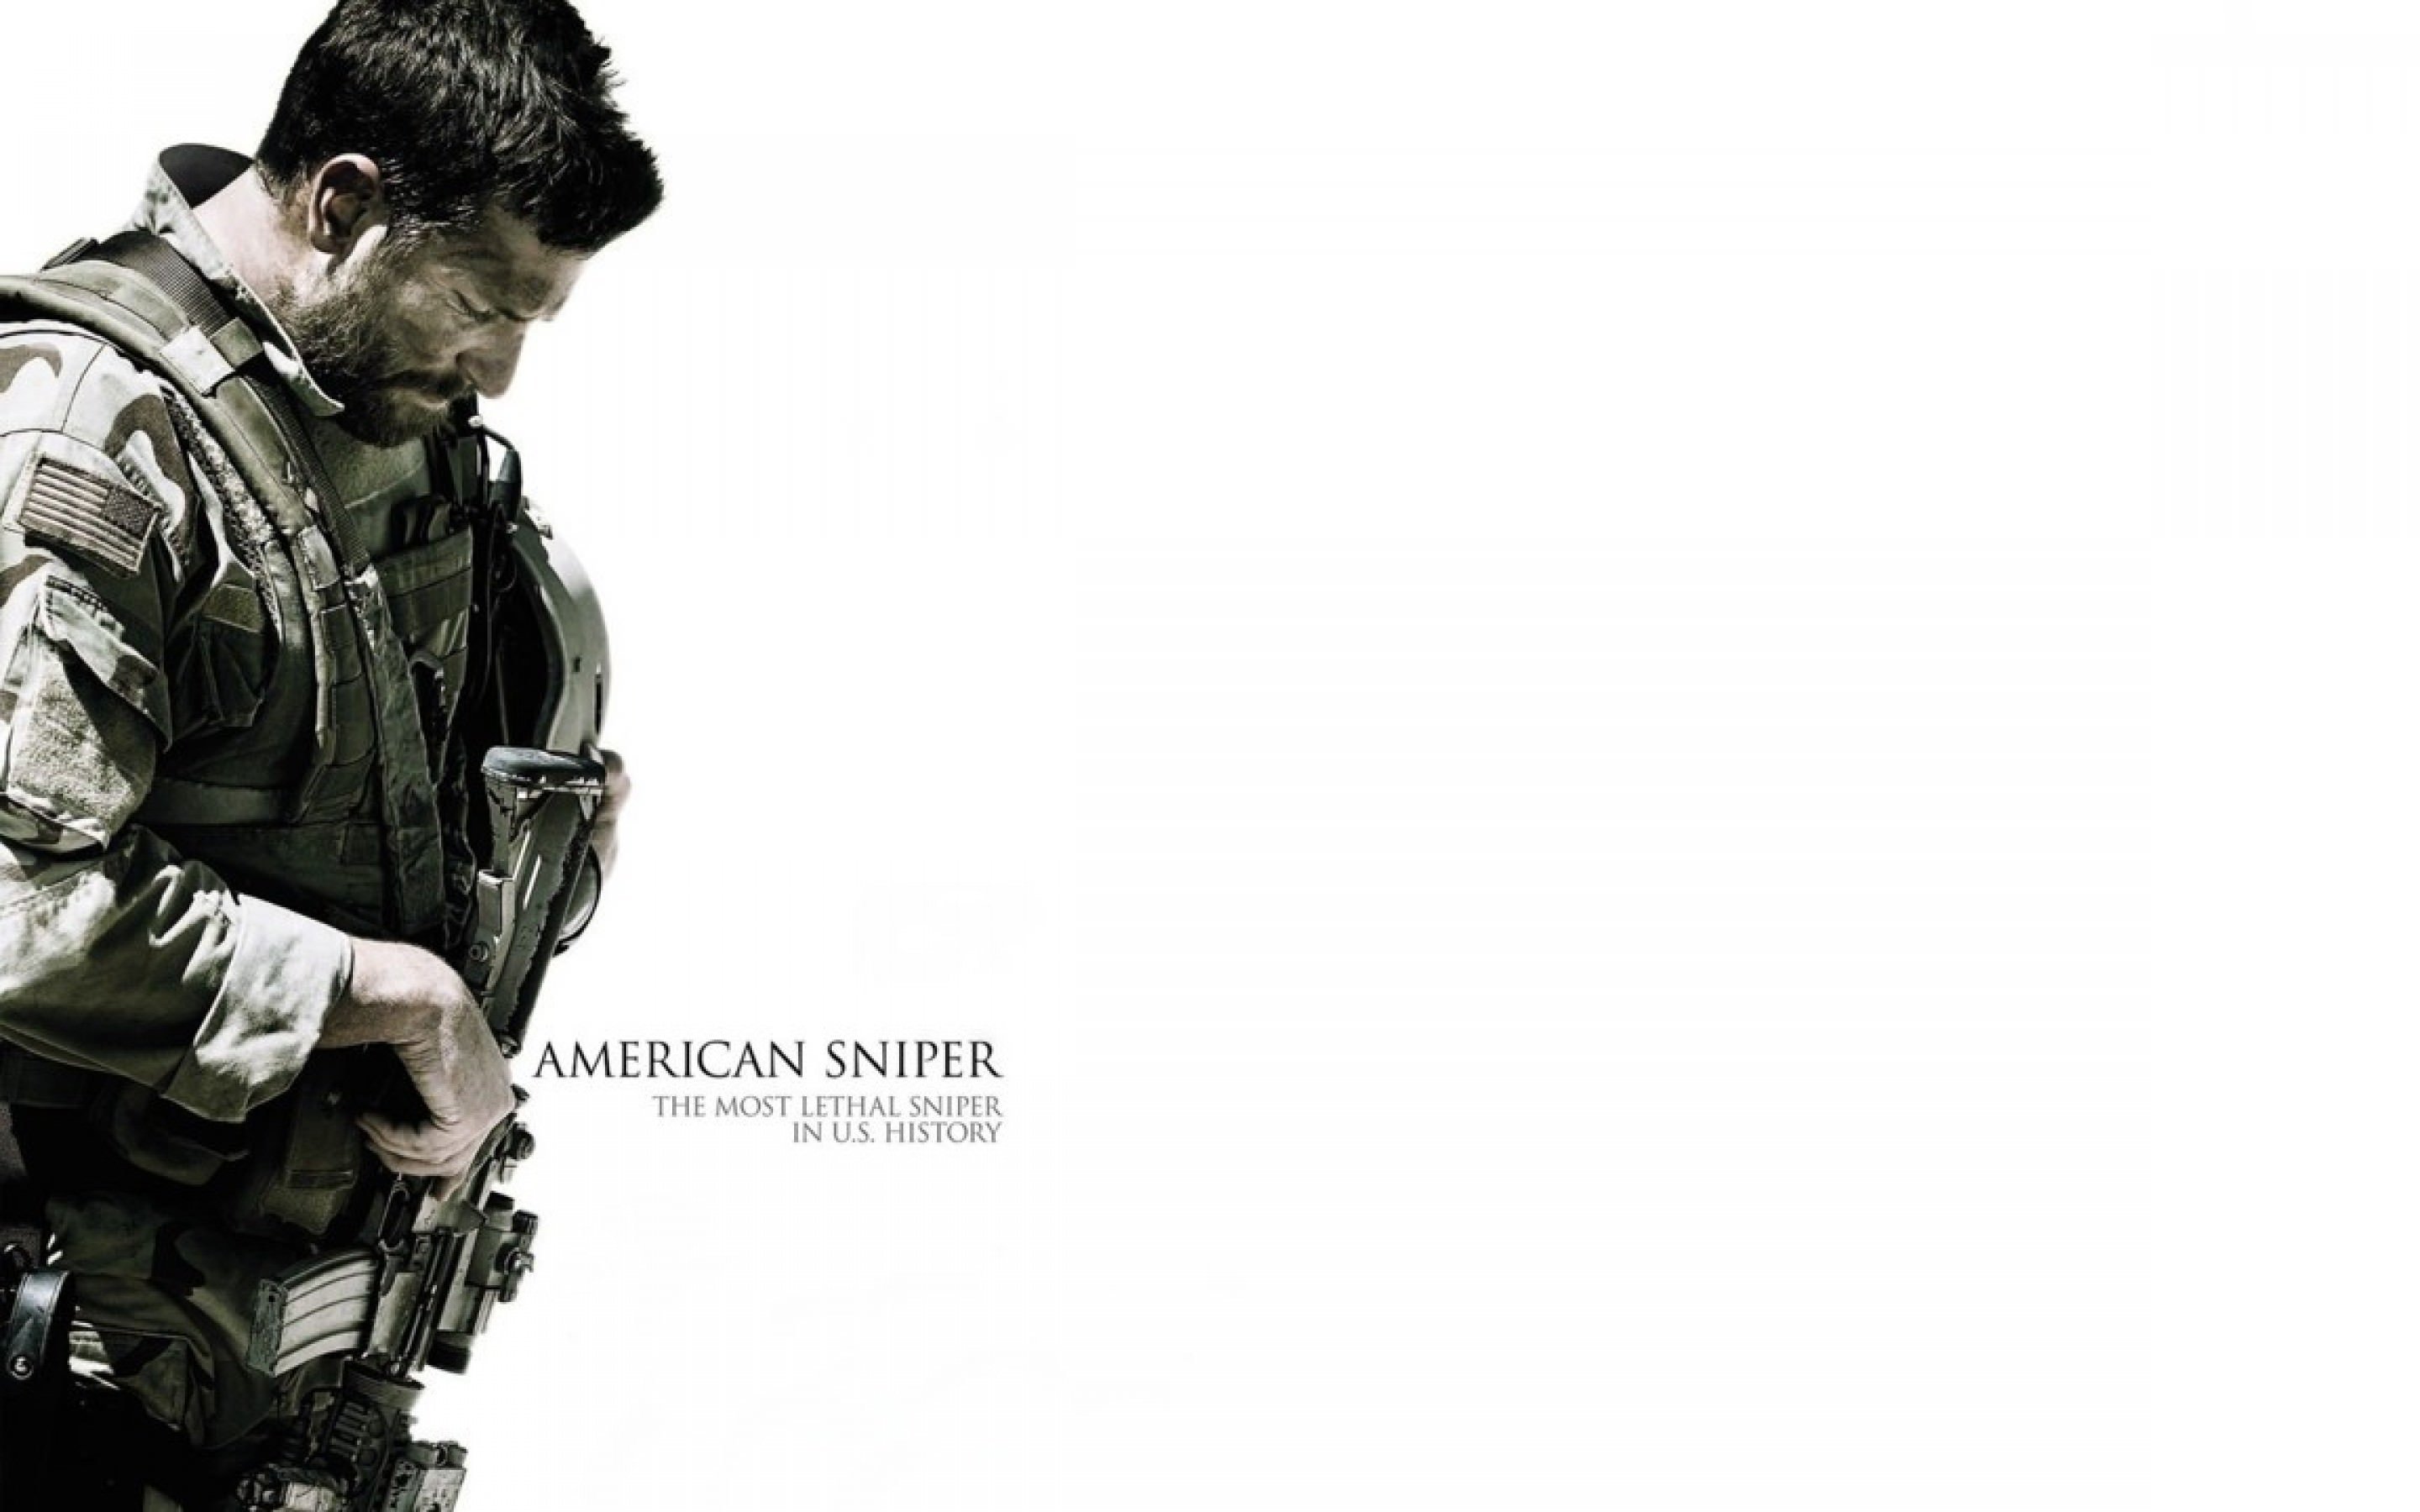 Bradley Cooper As Chris Kyle in American sniper Wallpaper for Desktop 2880x1800